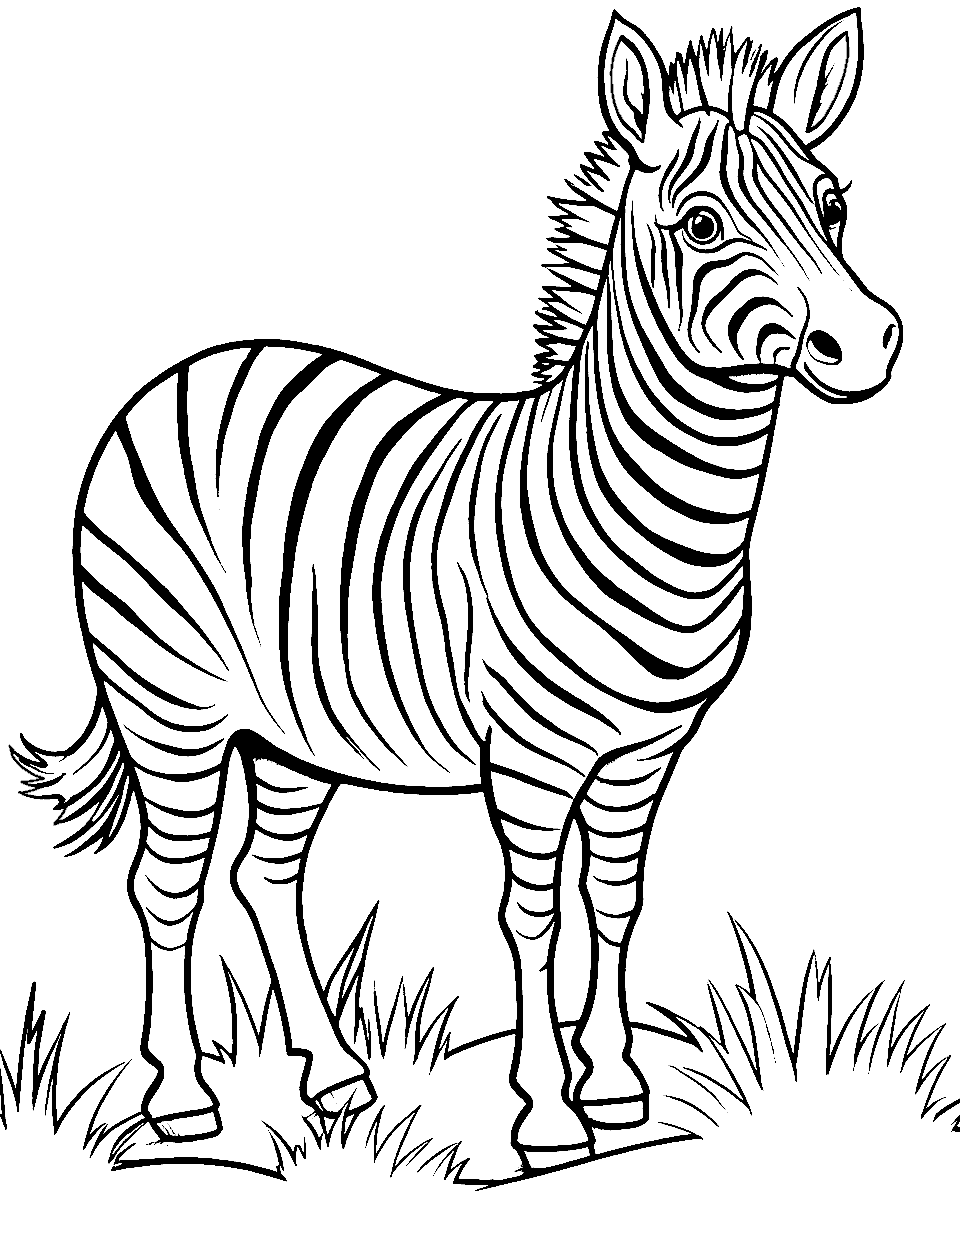 Zebra Zigzag Coloring Page - A zebra standing in a field.